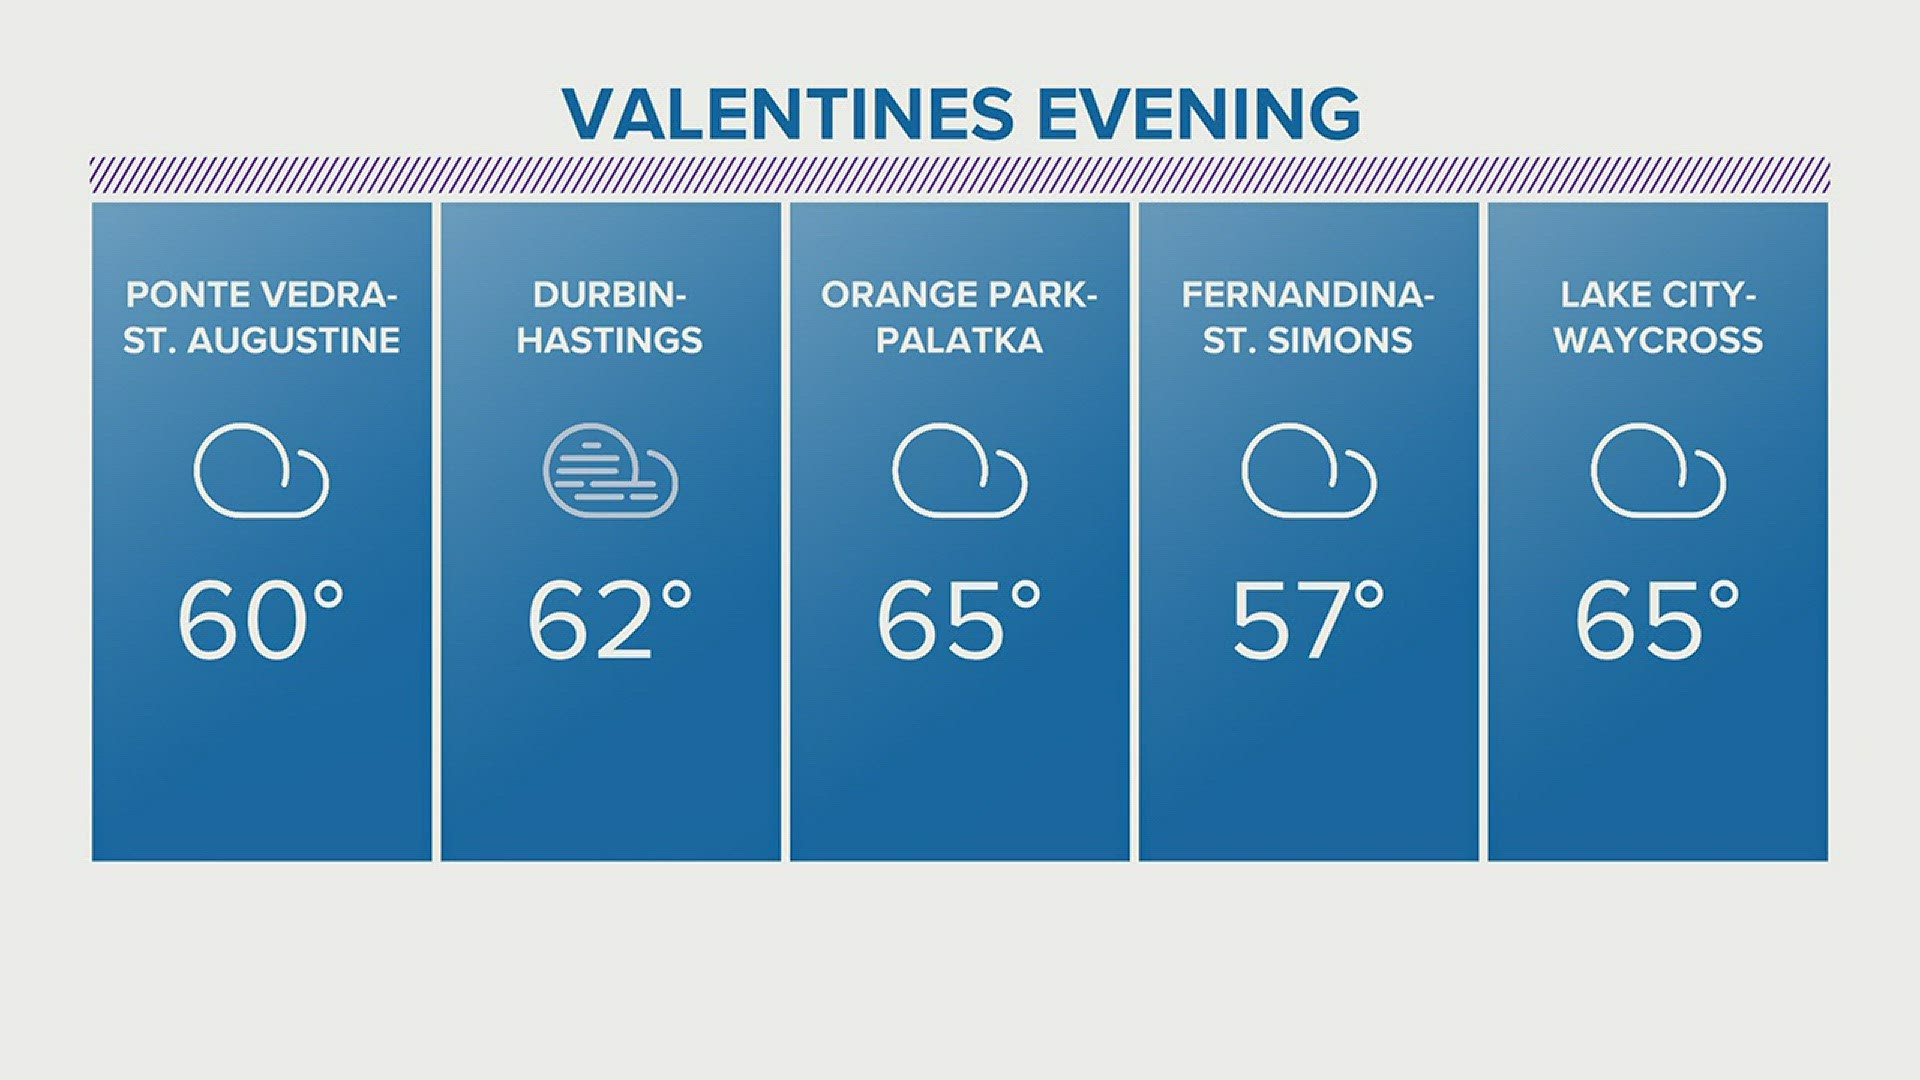 Weather Update: Tim Deegan previews weather on Valentine's Day